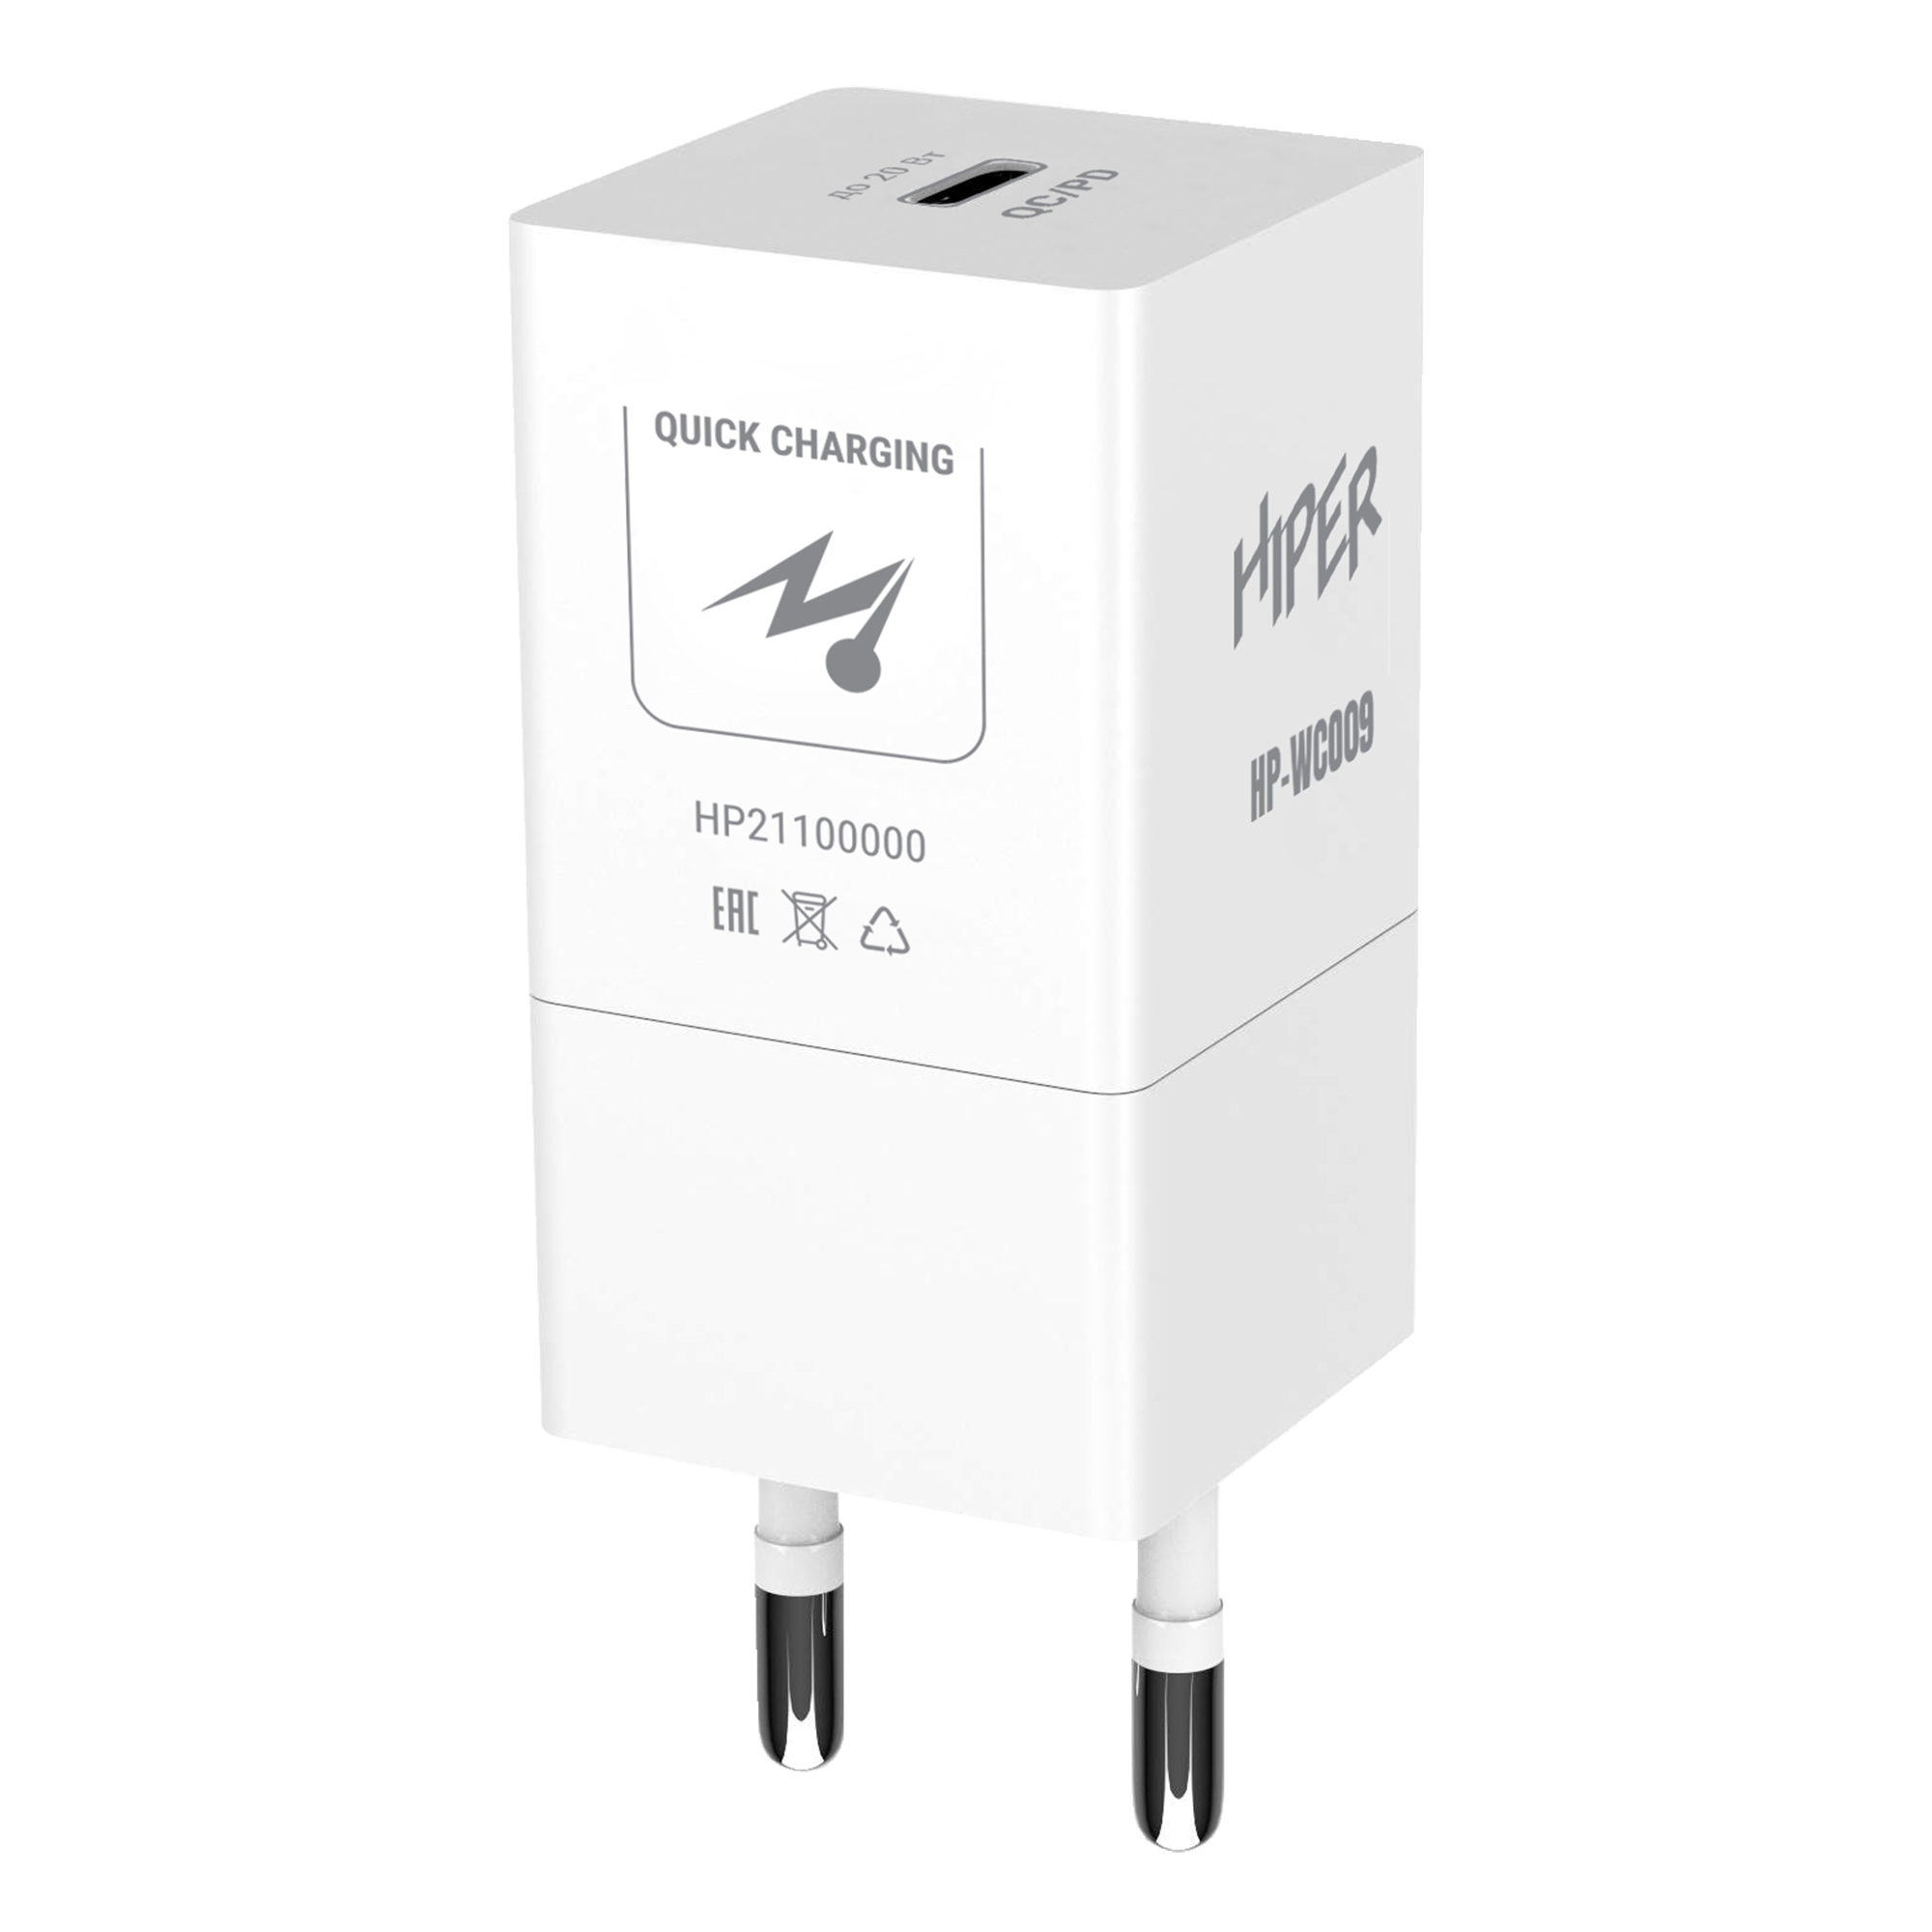 Сетевое зарядное устройство HIPER HP-WC009 20W, USB type-C, Quick Charge, PD, 3A, белый